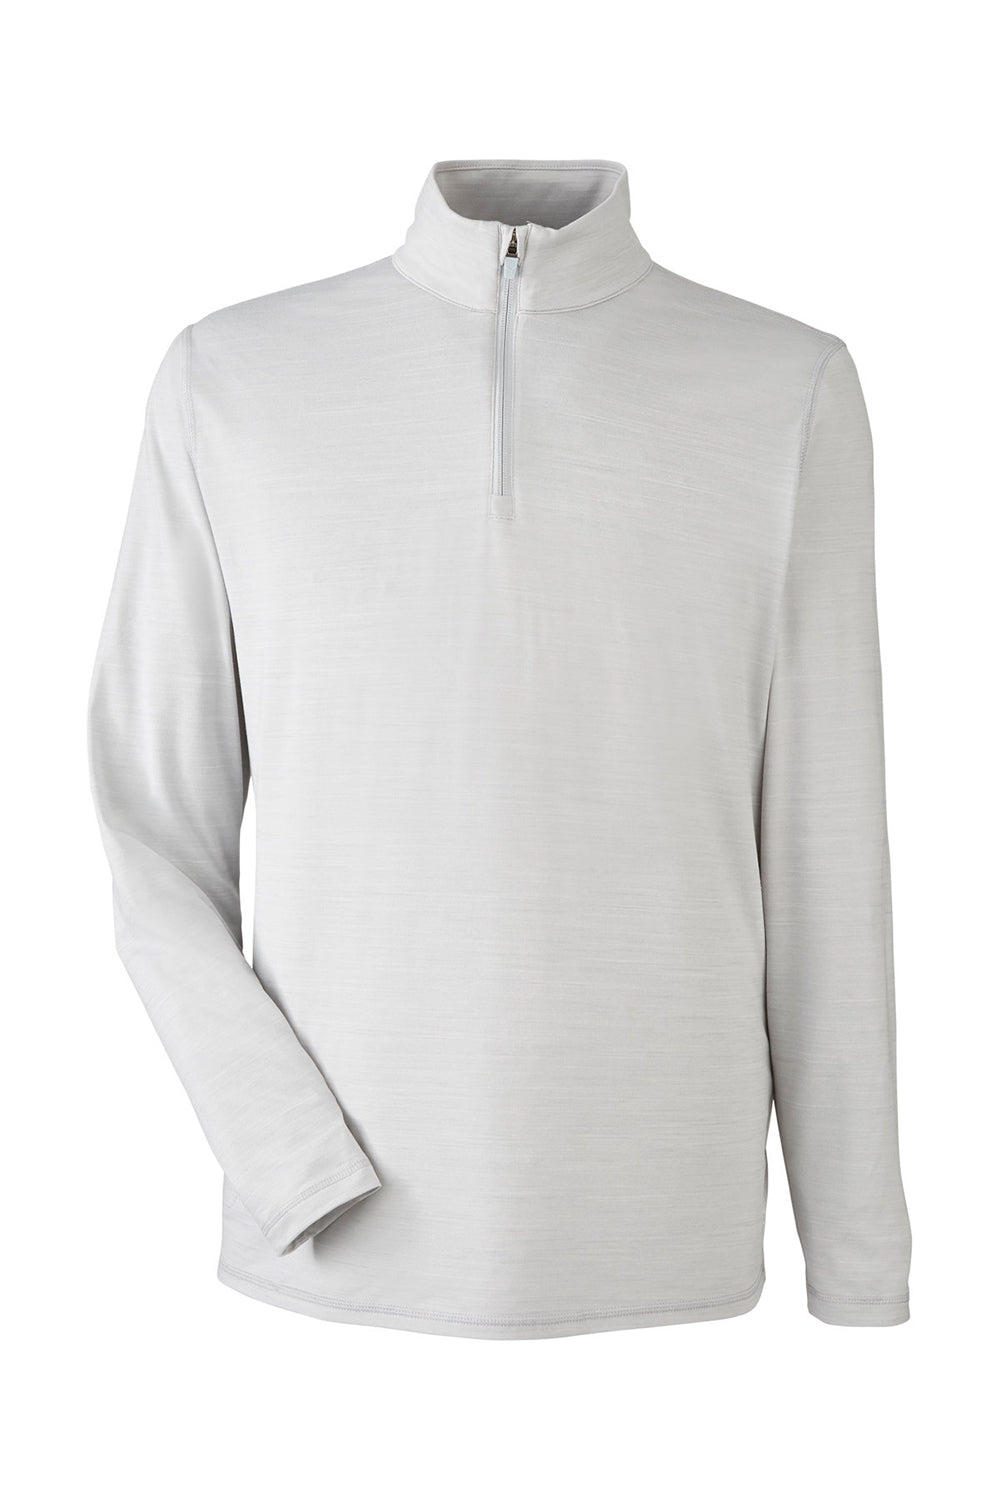 Puma 532016 Mens Cloudspun 1/4 Zip Sweatshirt Heather High Rise Grey Flat Front